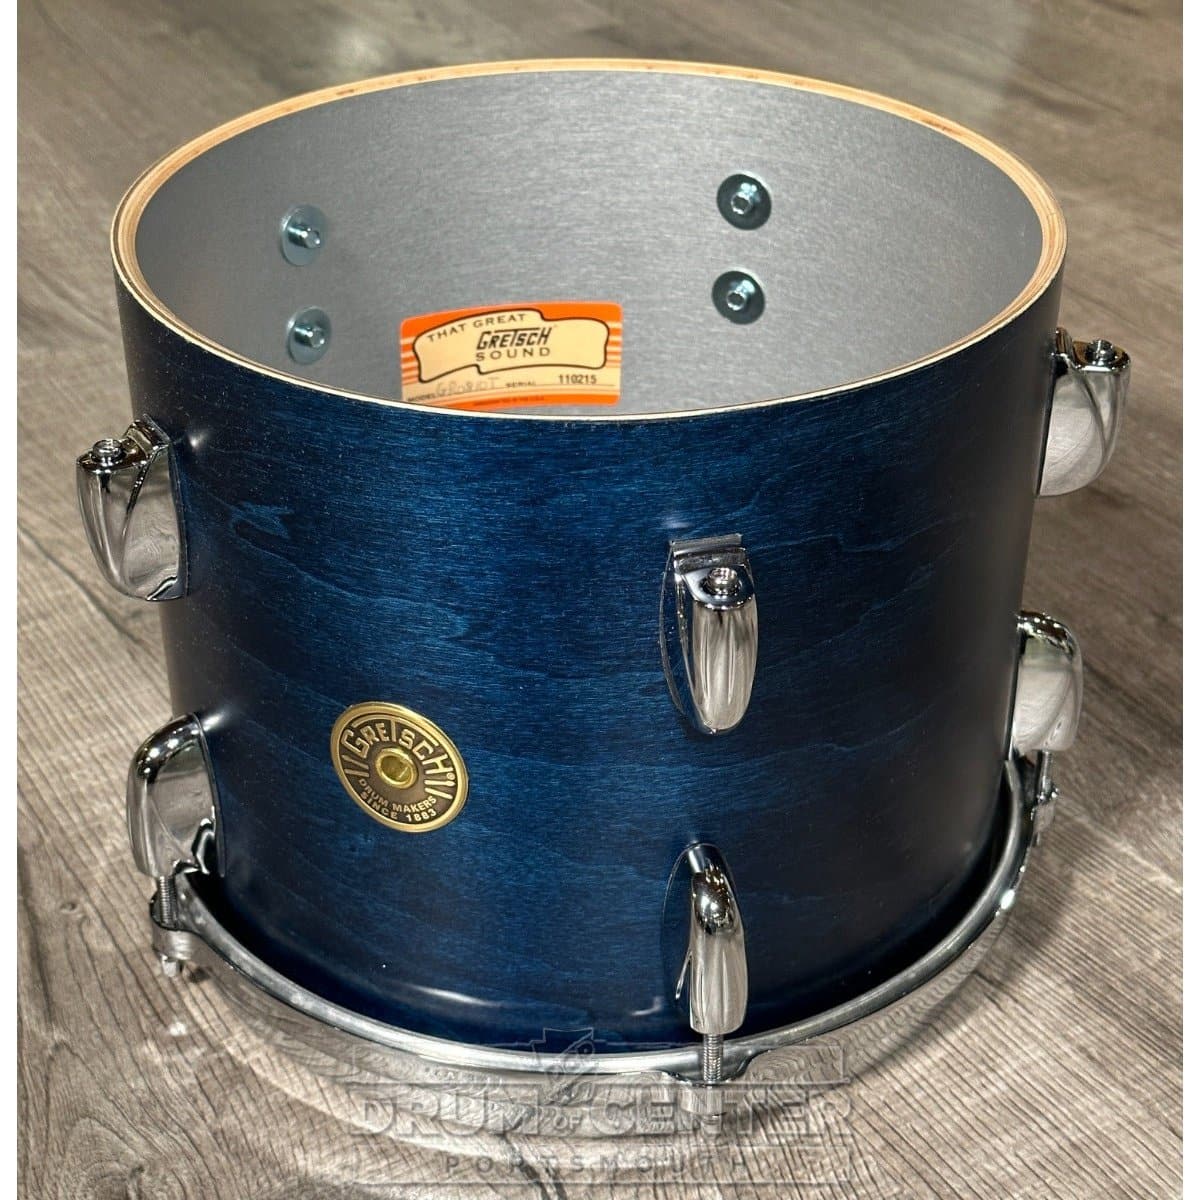 Gretsch USA Custom 5pc Drum Set Satin Azure Blue